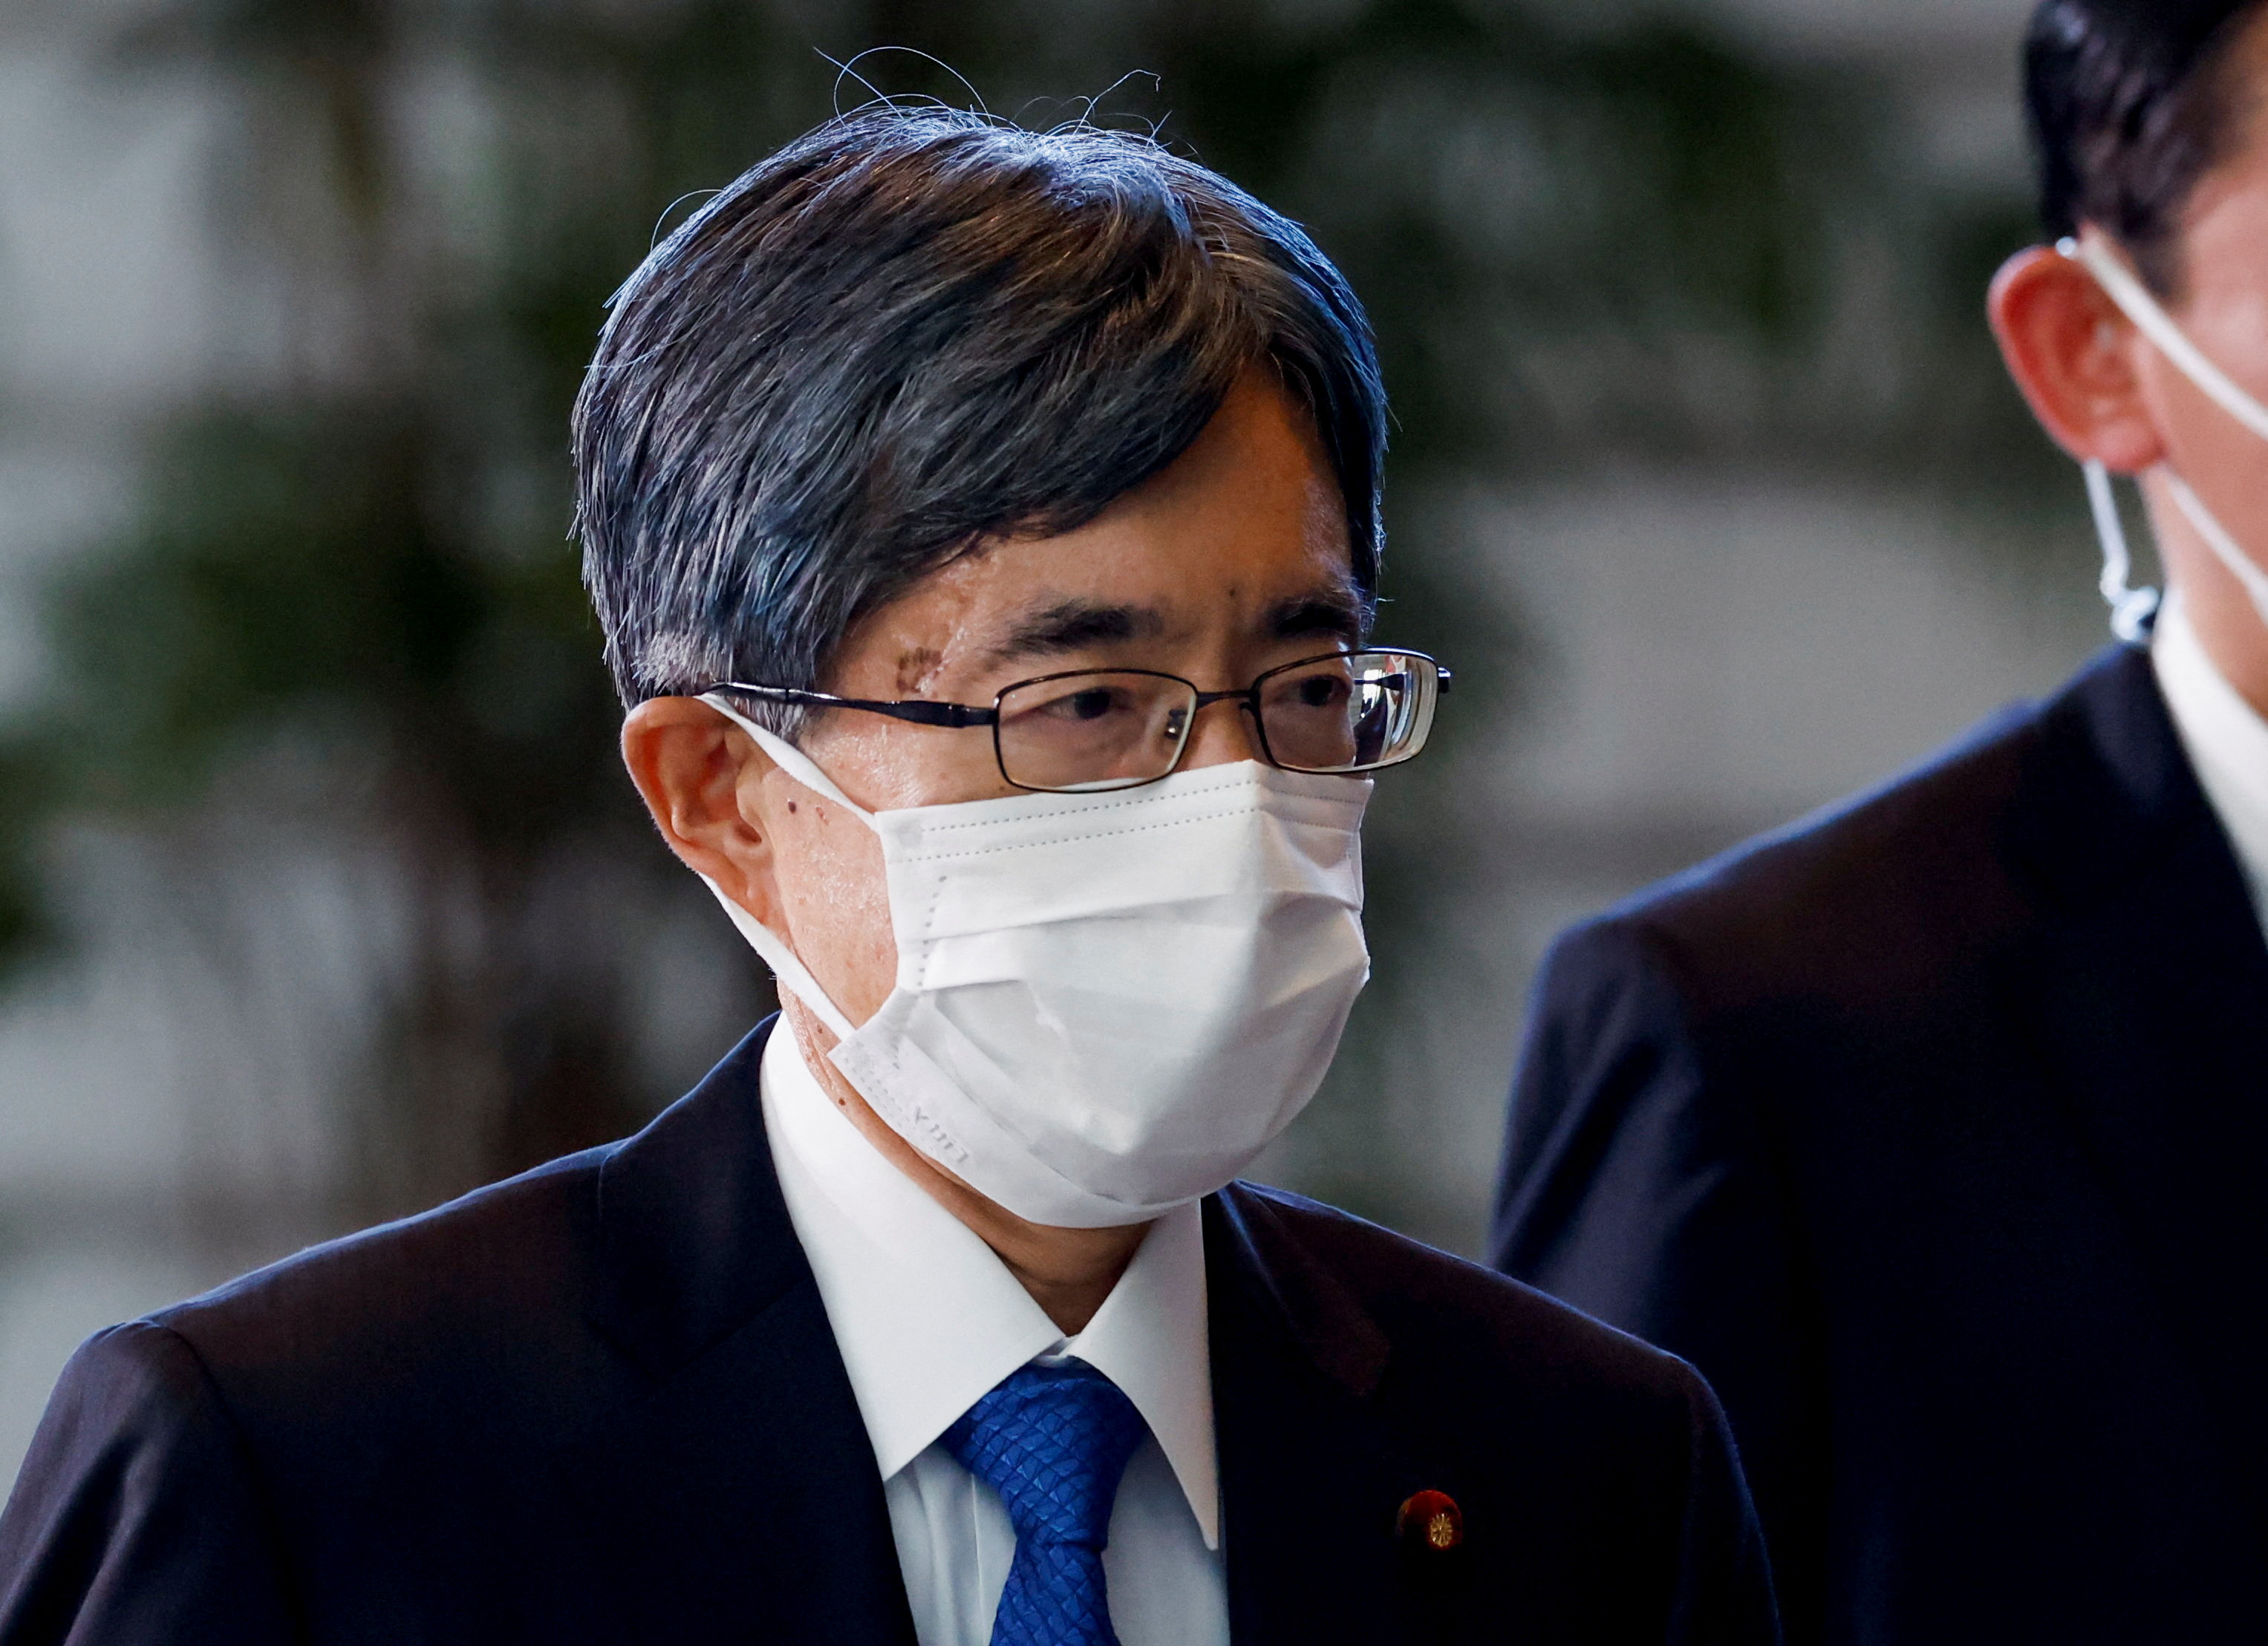 Minoru Terada arrives at Prime Minister Fumio Kishida's official residence in Tokyo, Japan August 10, 2022. /Reuters